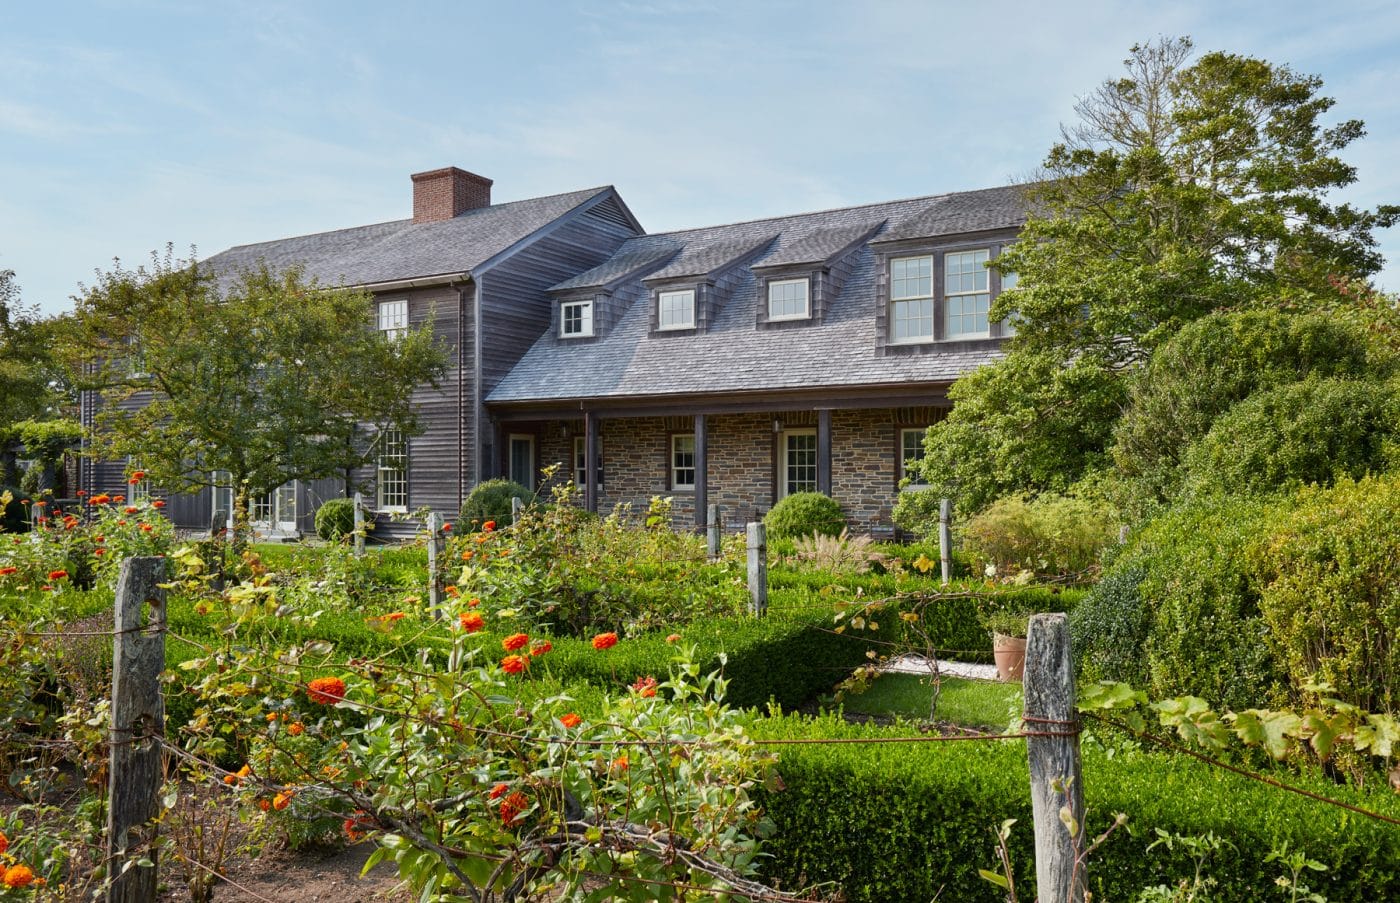 The gardens of the East Hampton home